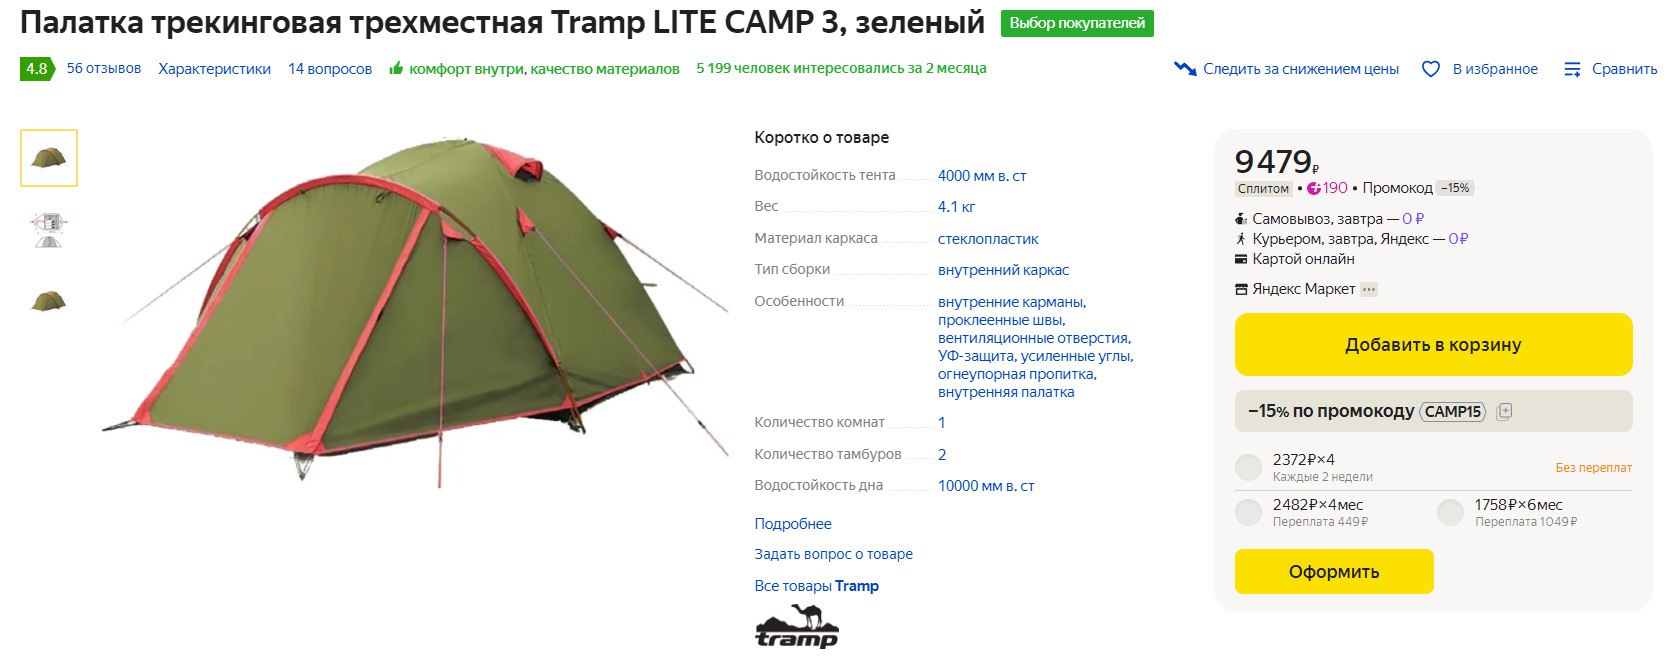 Tramp camp 3. Палатка Tramp Camp 3. Tramp Lite палатка Camp 3. Палатка Tramp Lite Camp 2. Tramp Lite Camp 4.